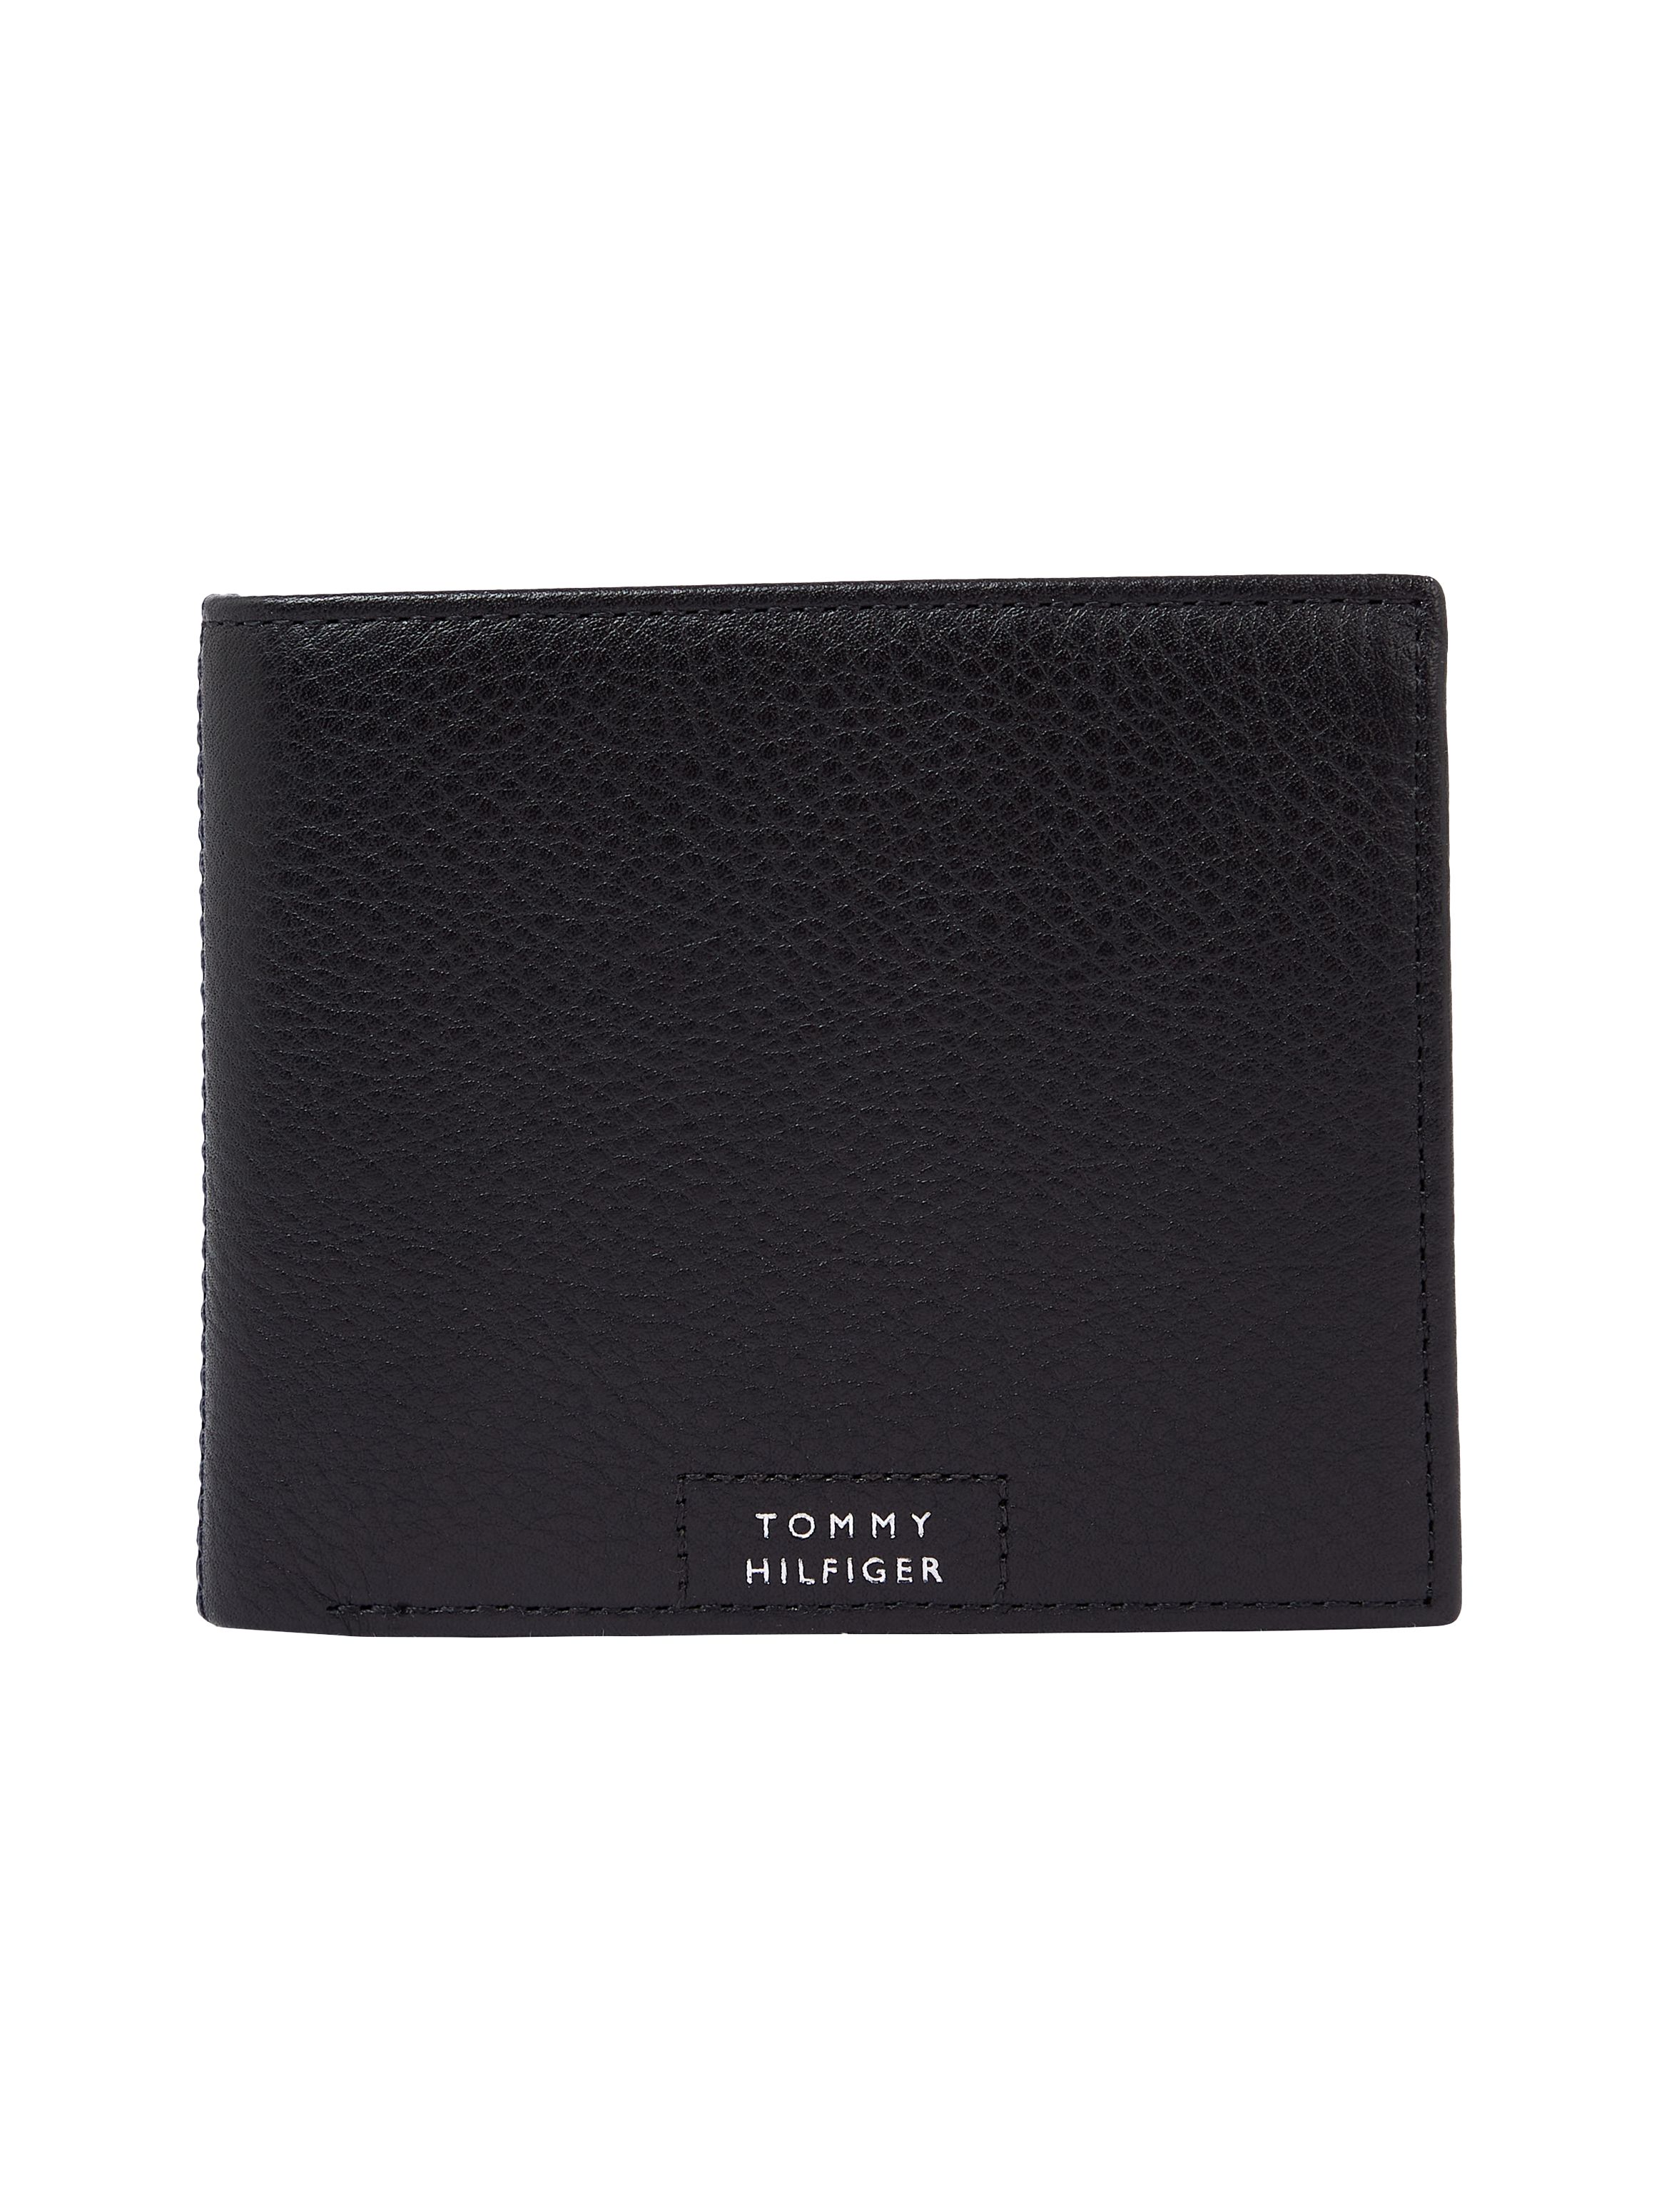 Tommy Hilfiger Premium Leather Bifold Credit Card Holder